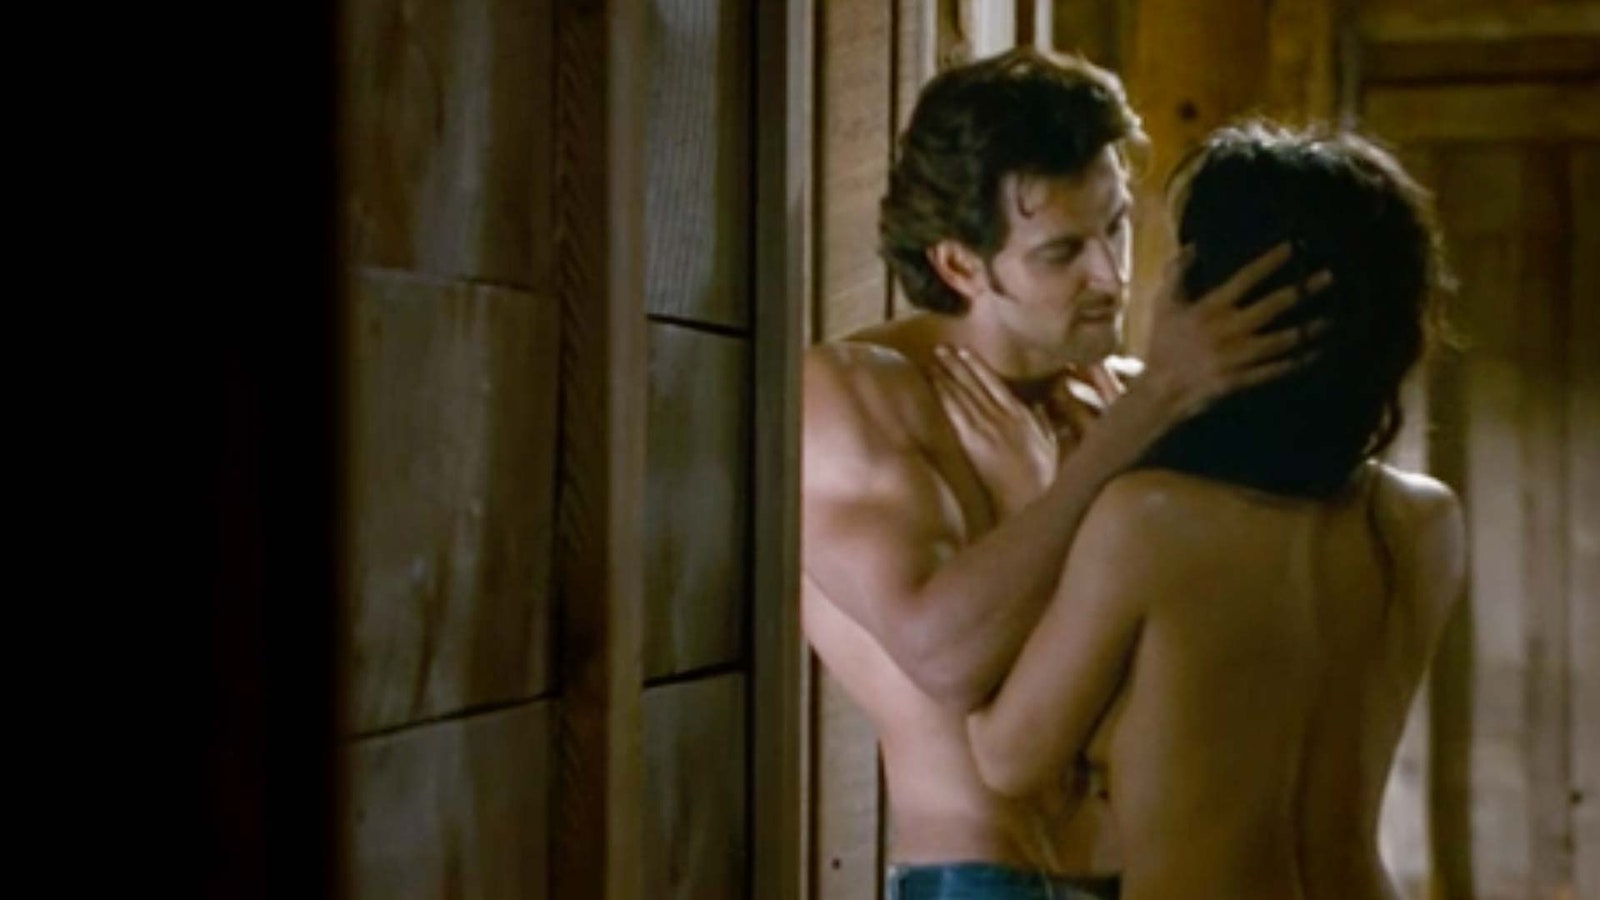 alex bivins share indian movie sex scene photos